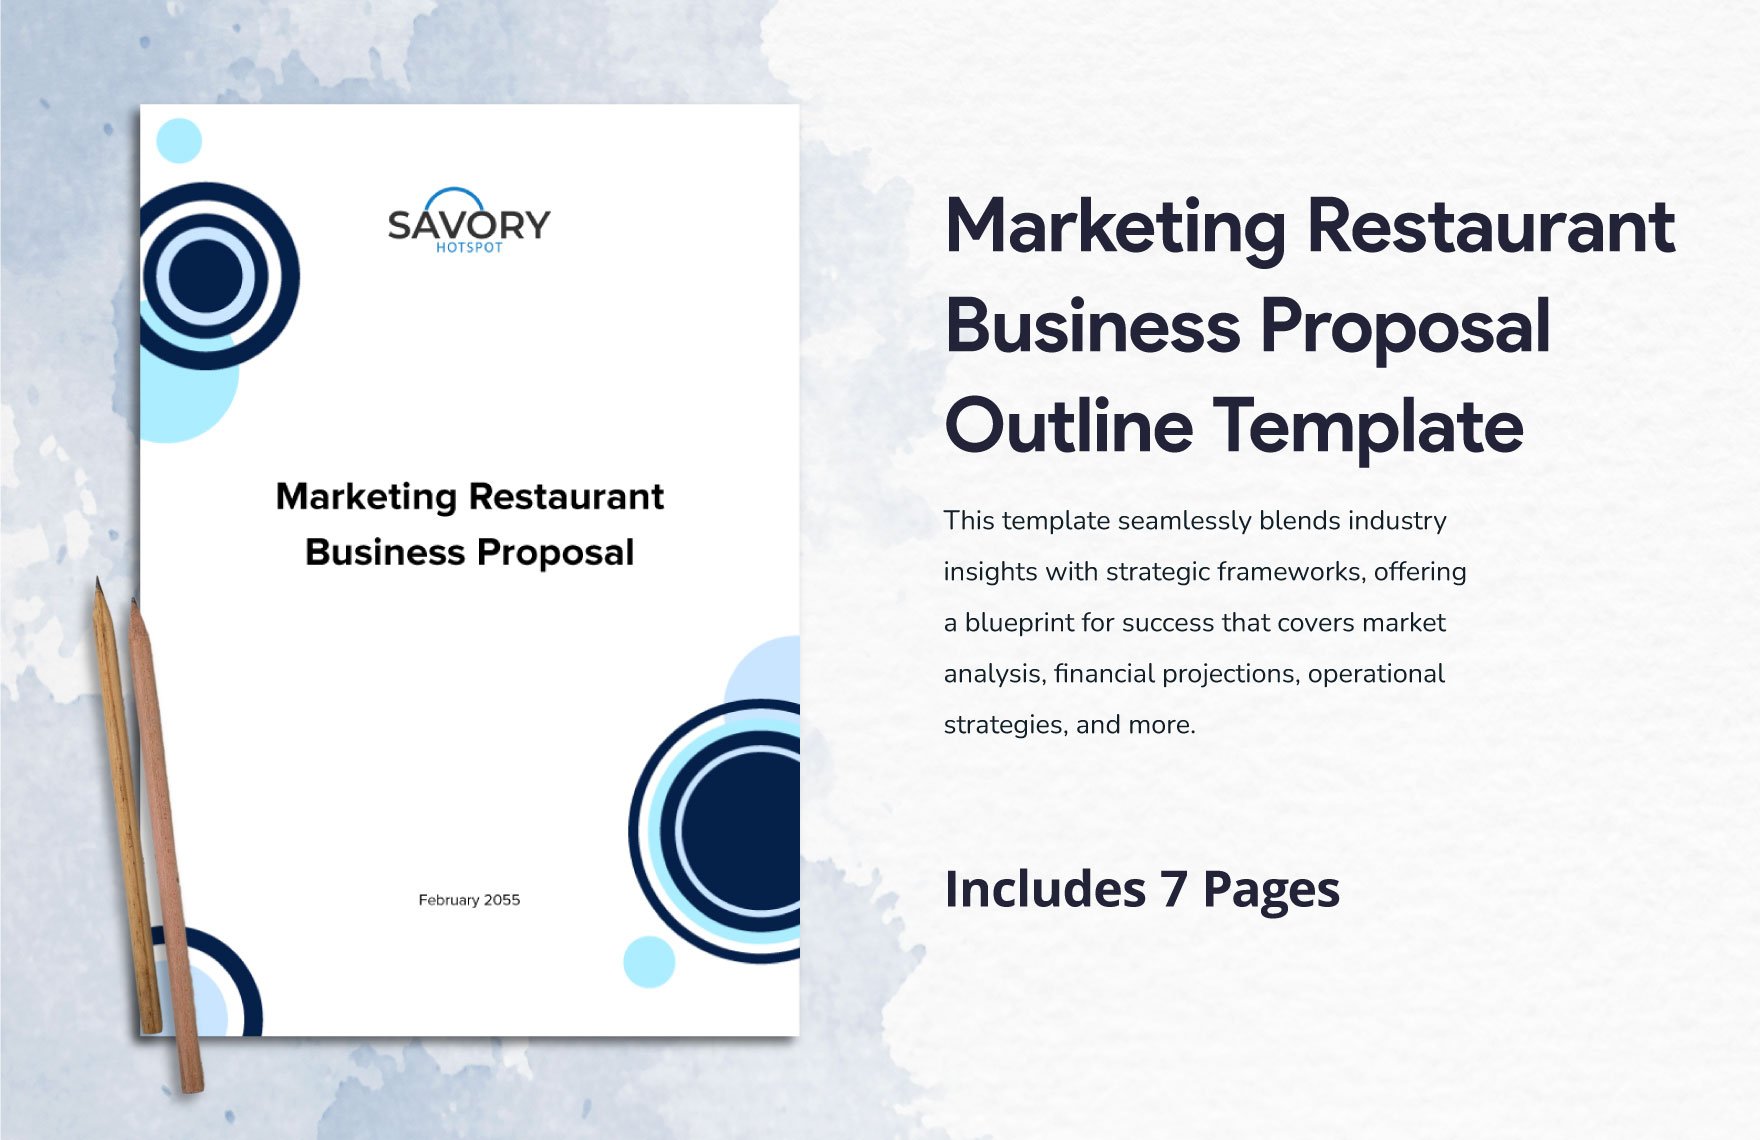 Marketing Restaurant Business Proposal Outline Template